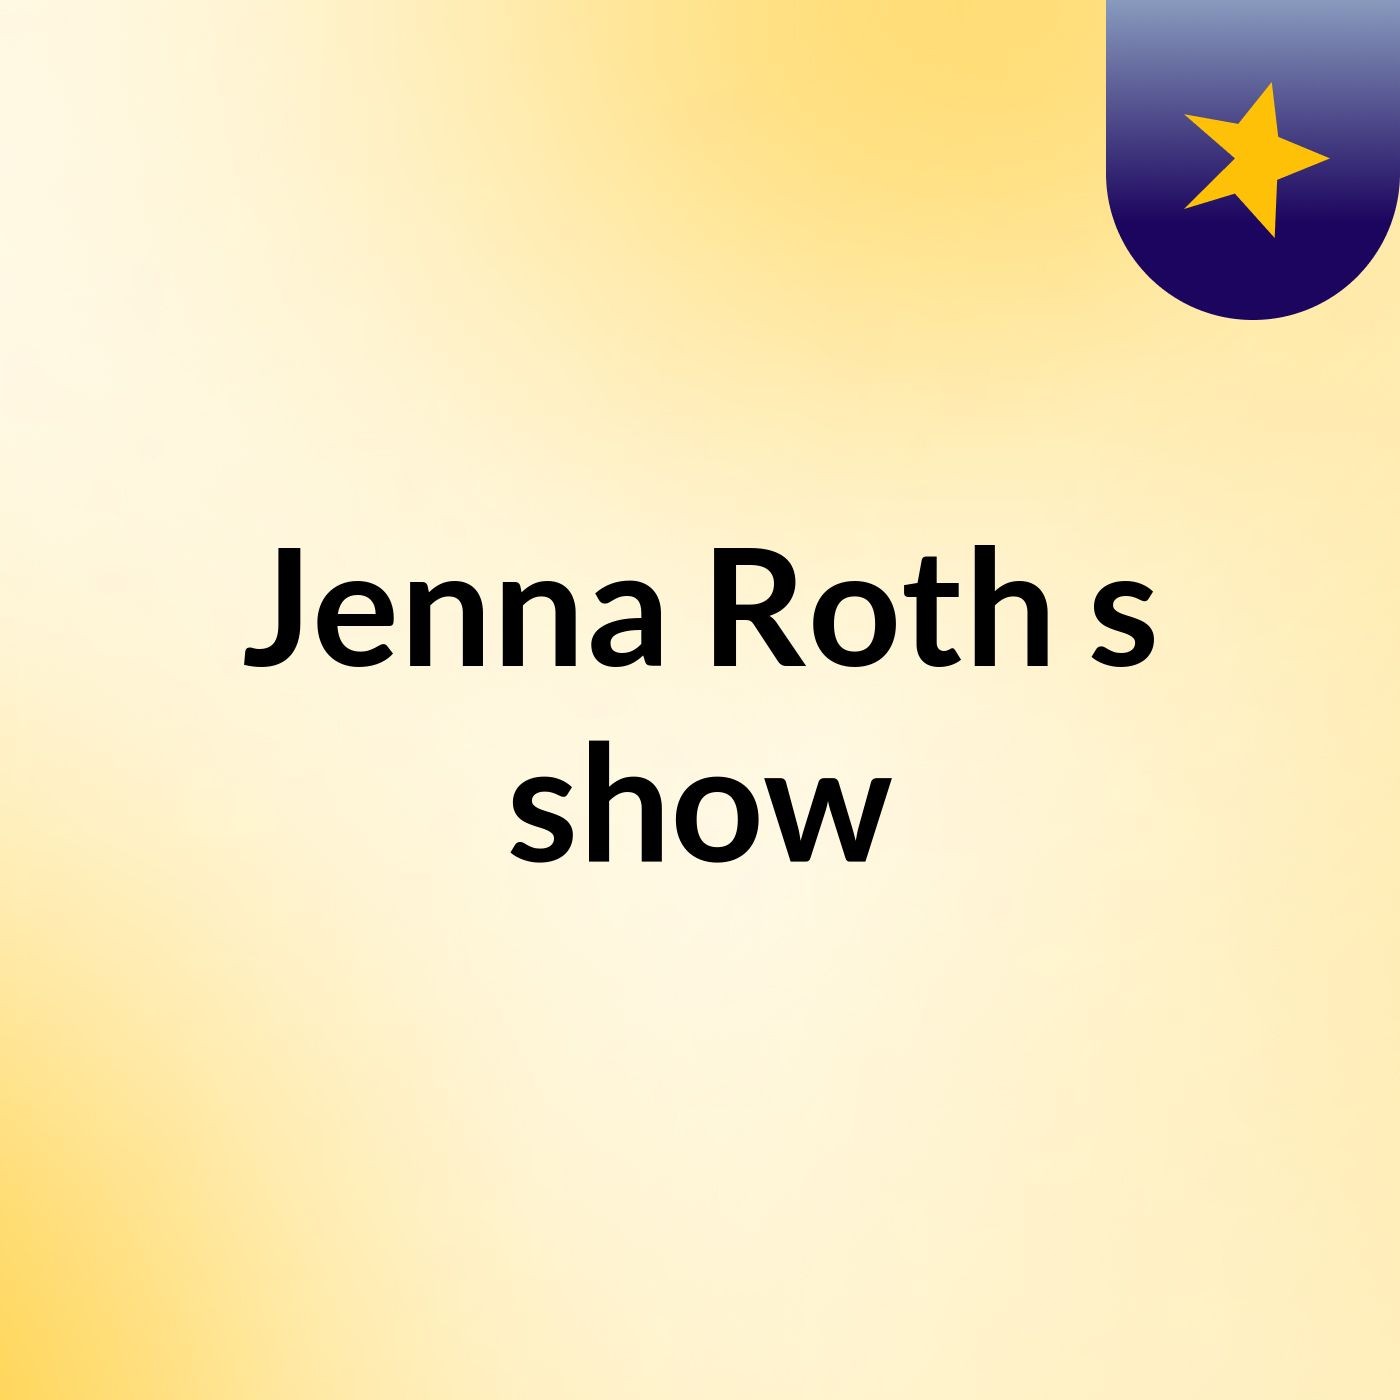 Jenna Roth's show